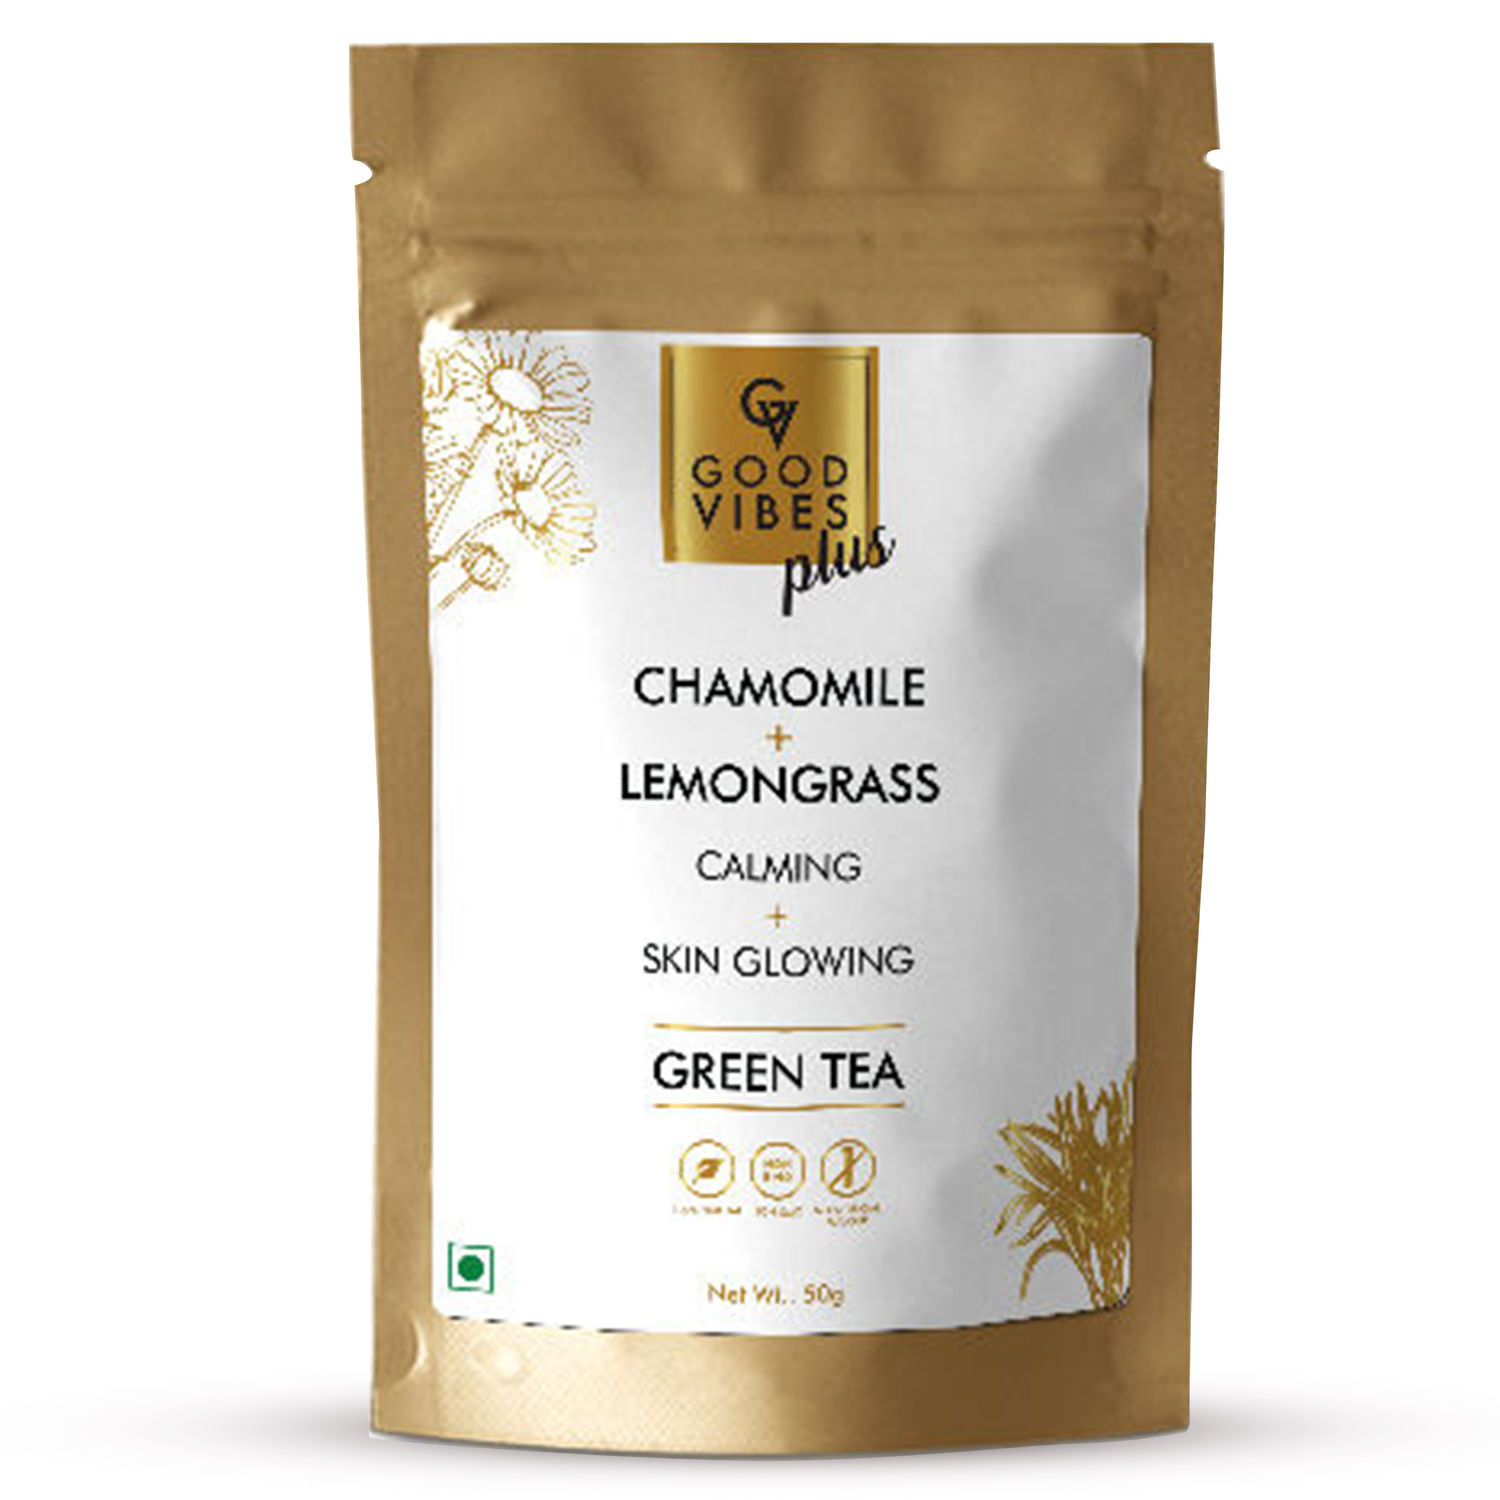 Buy Good Vibes Plus Calming + Skin Glowing Green Tea - Chamomile + Lemongrass (50 gm) - Purplle